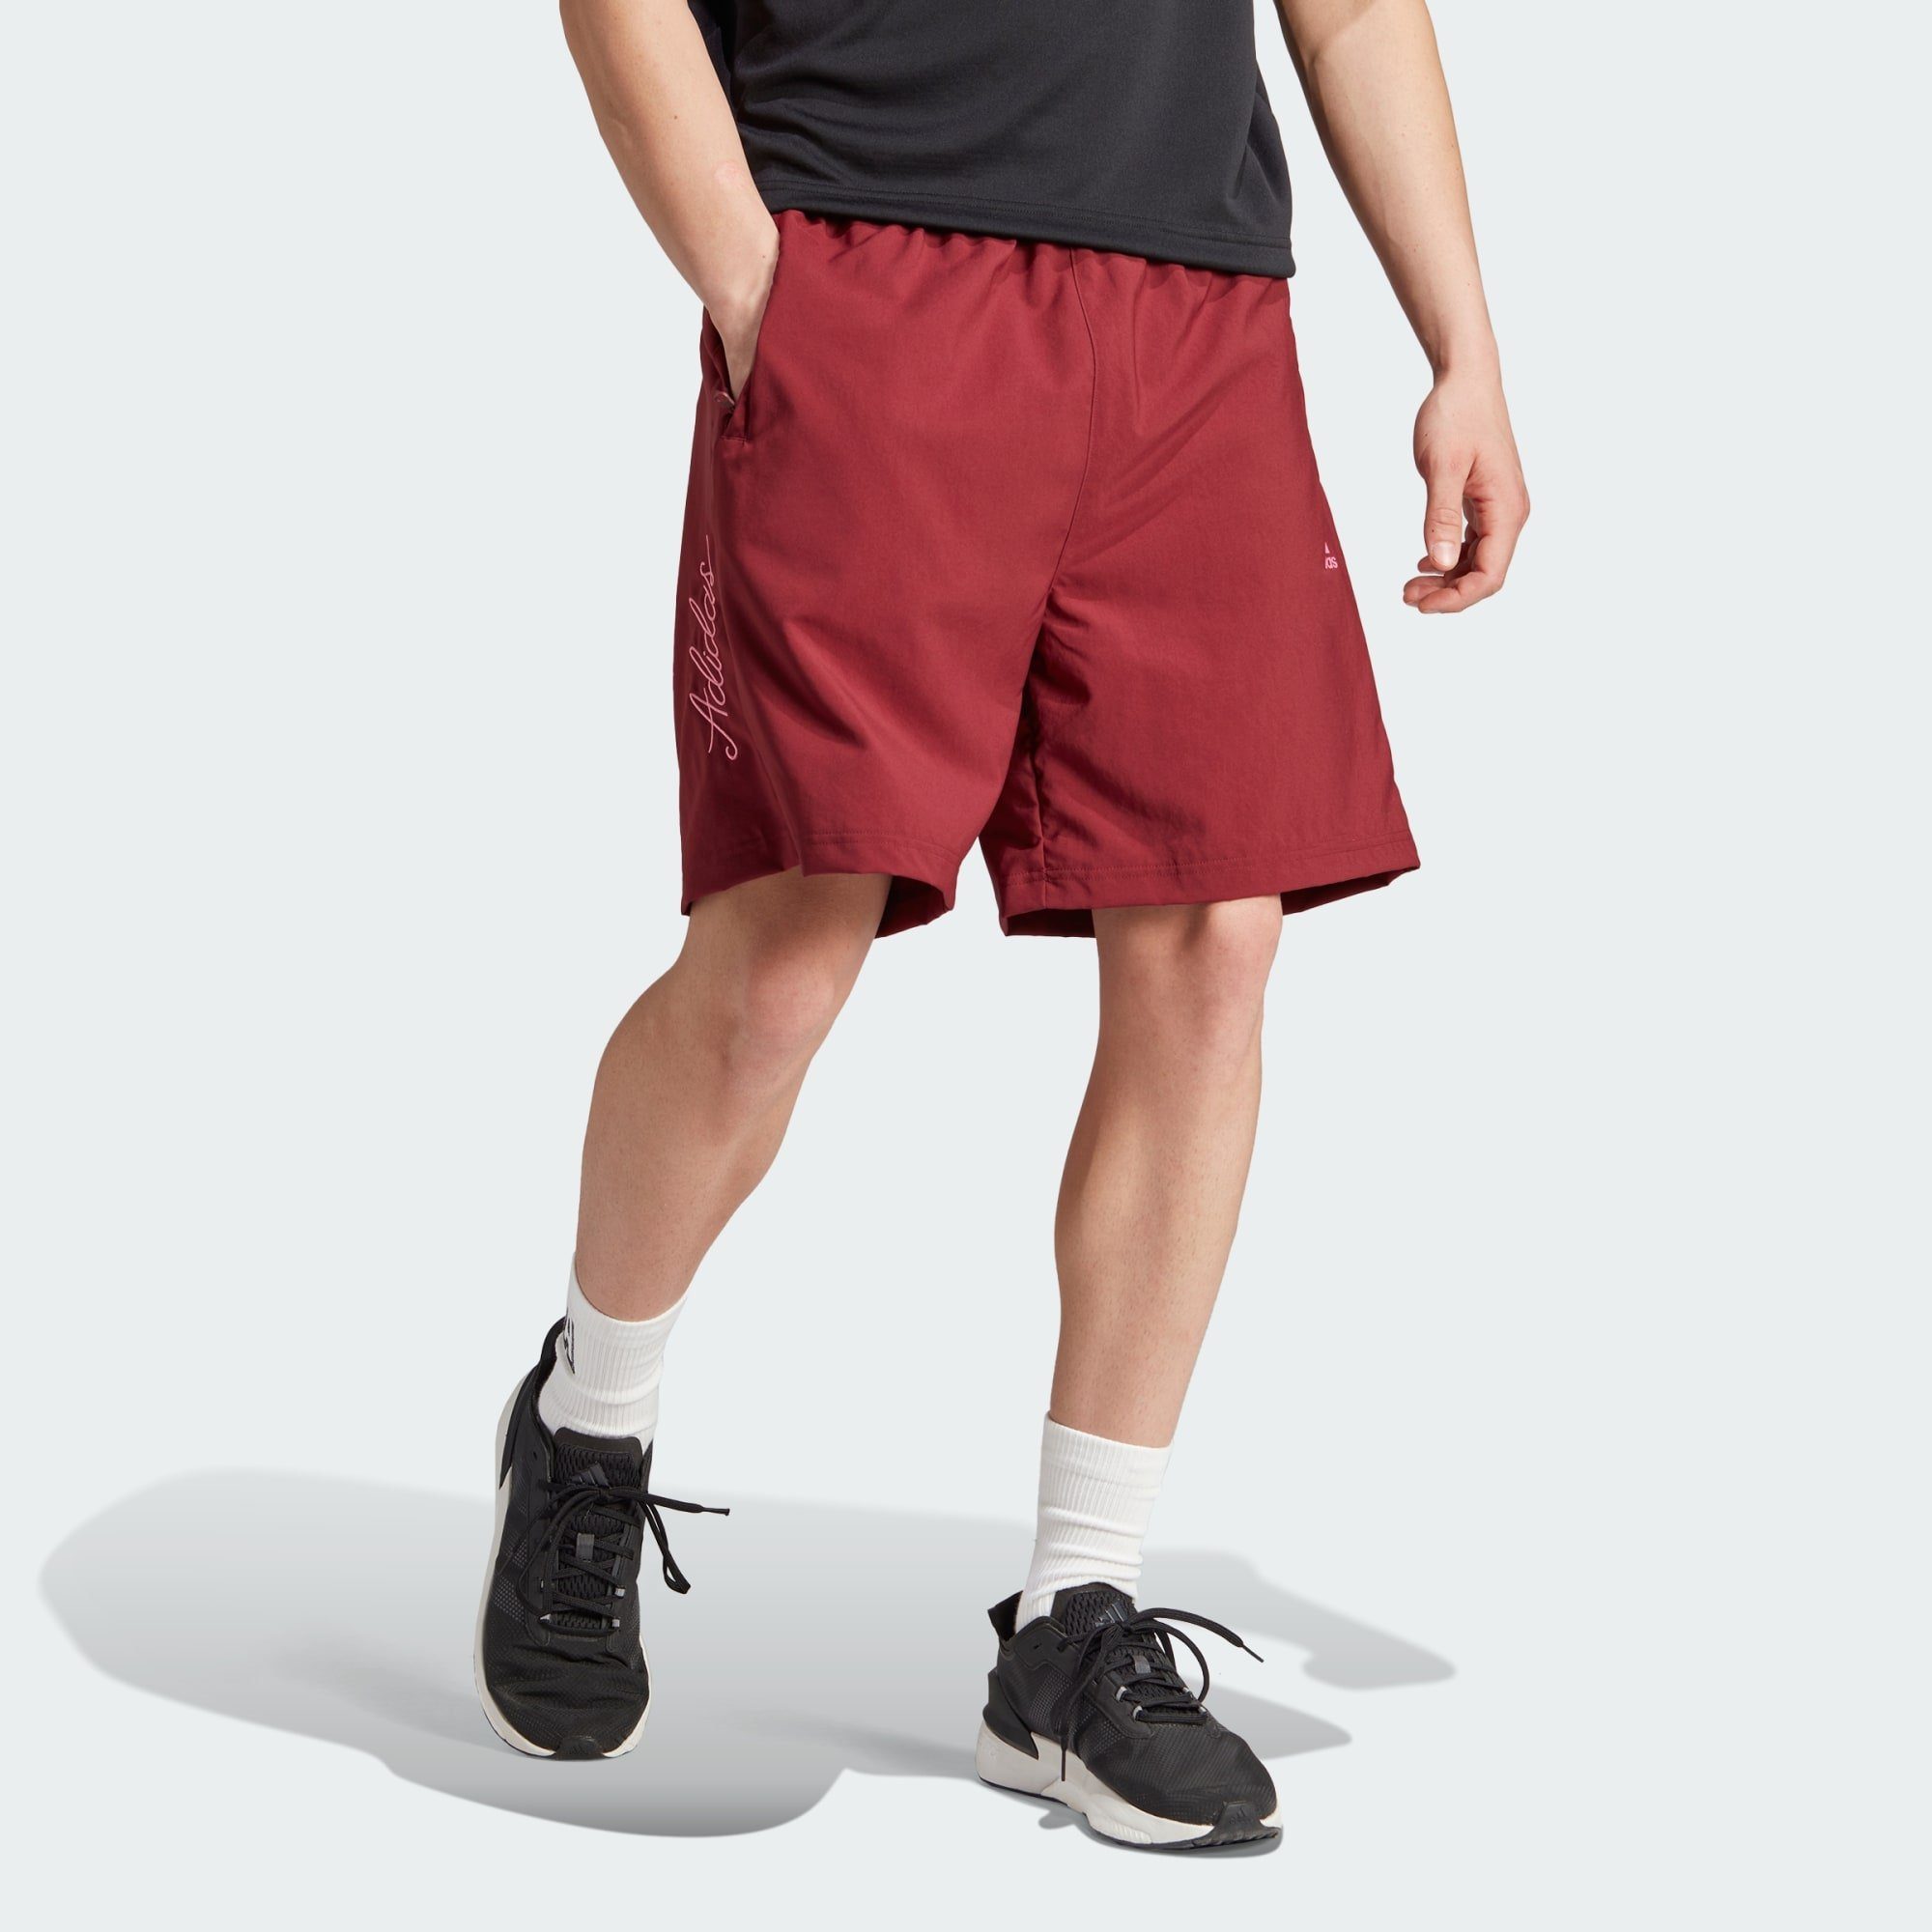 SHORTS Shorts Red Sportswear SCRIBBLE adidas Shadow